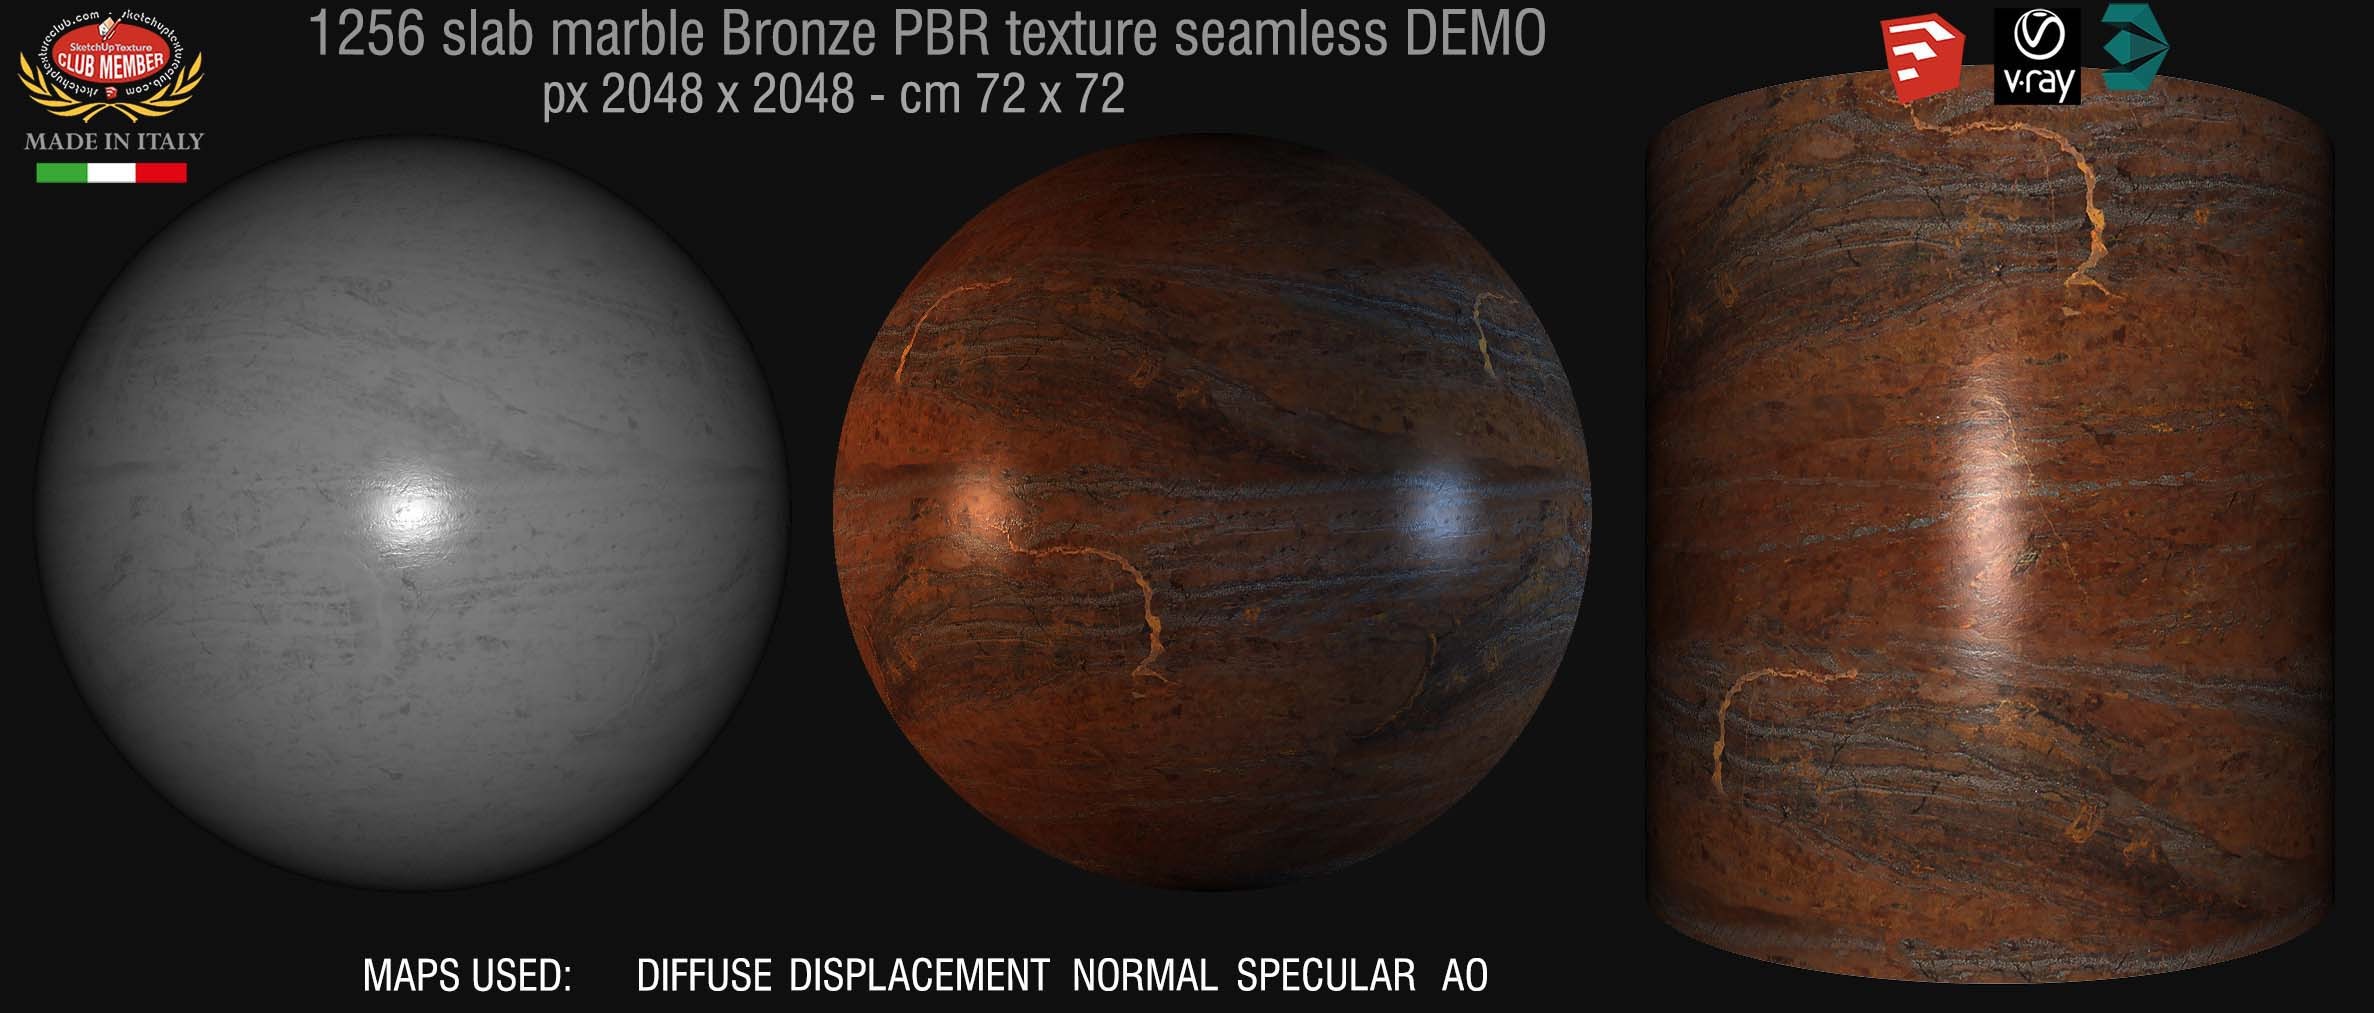 02030 Slab marble bronze texture seamless DEMO